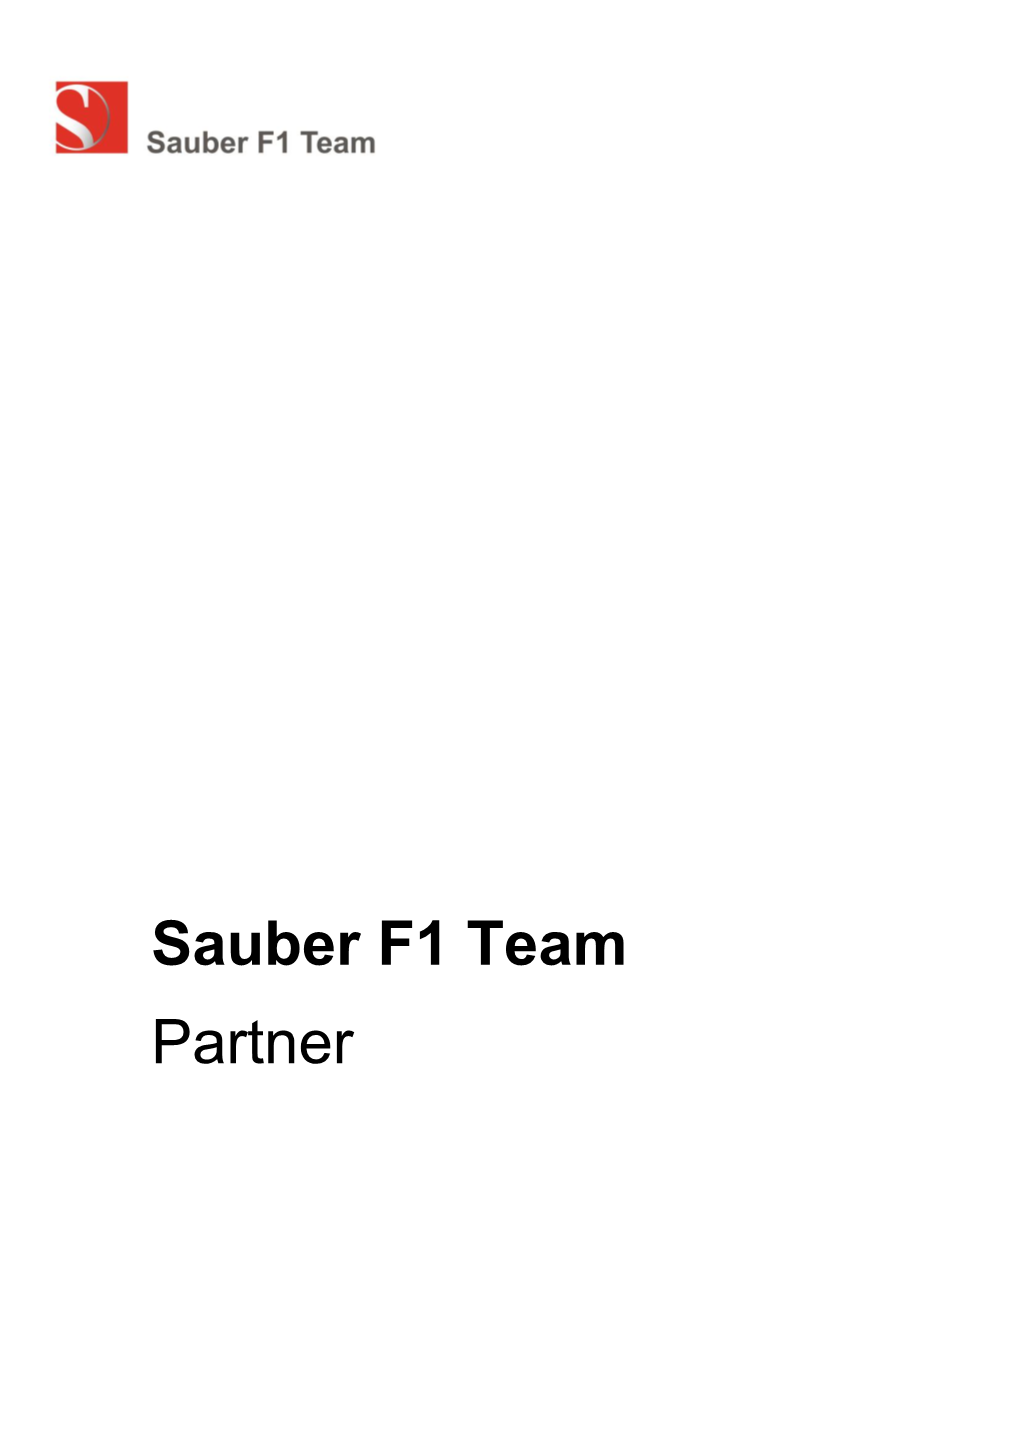 Sauber F1 Team Partner